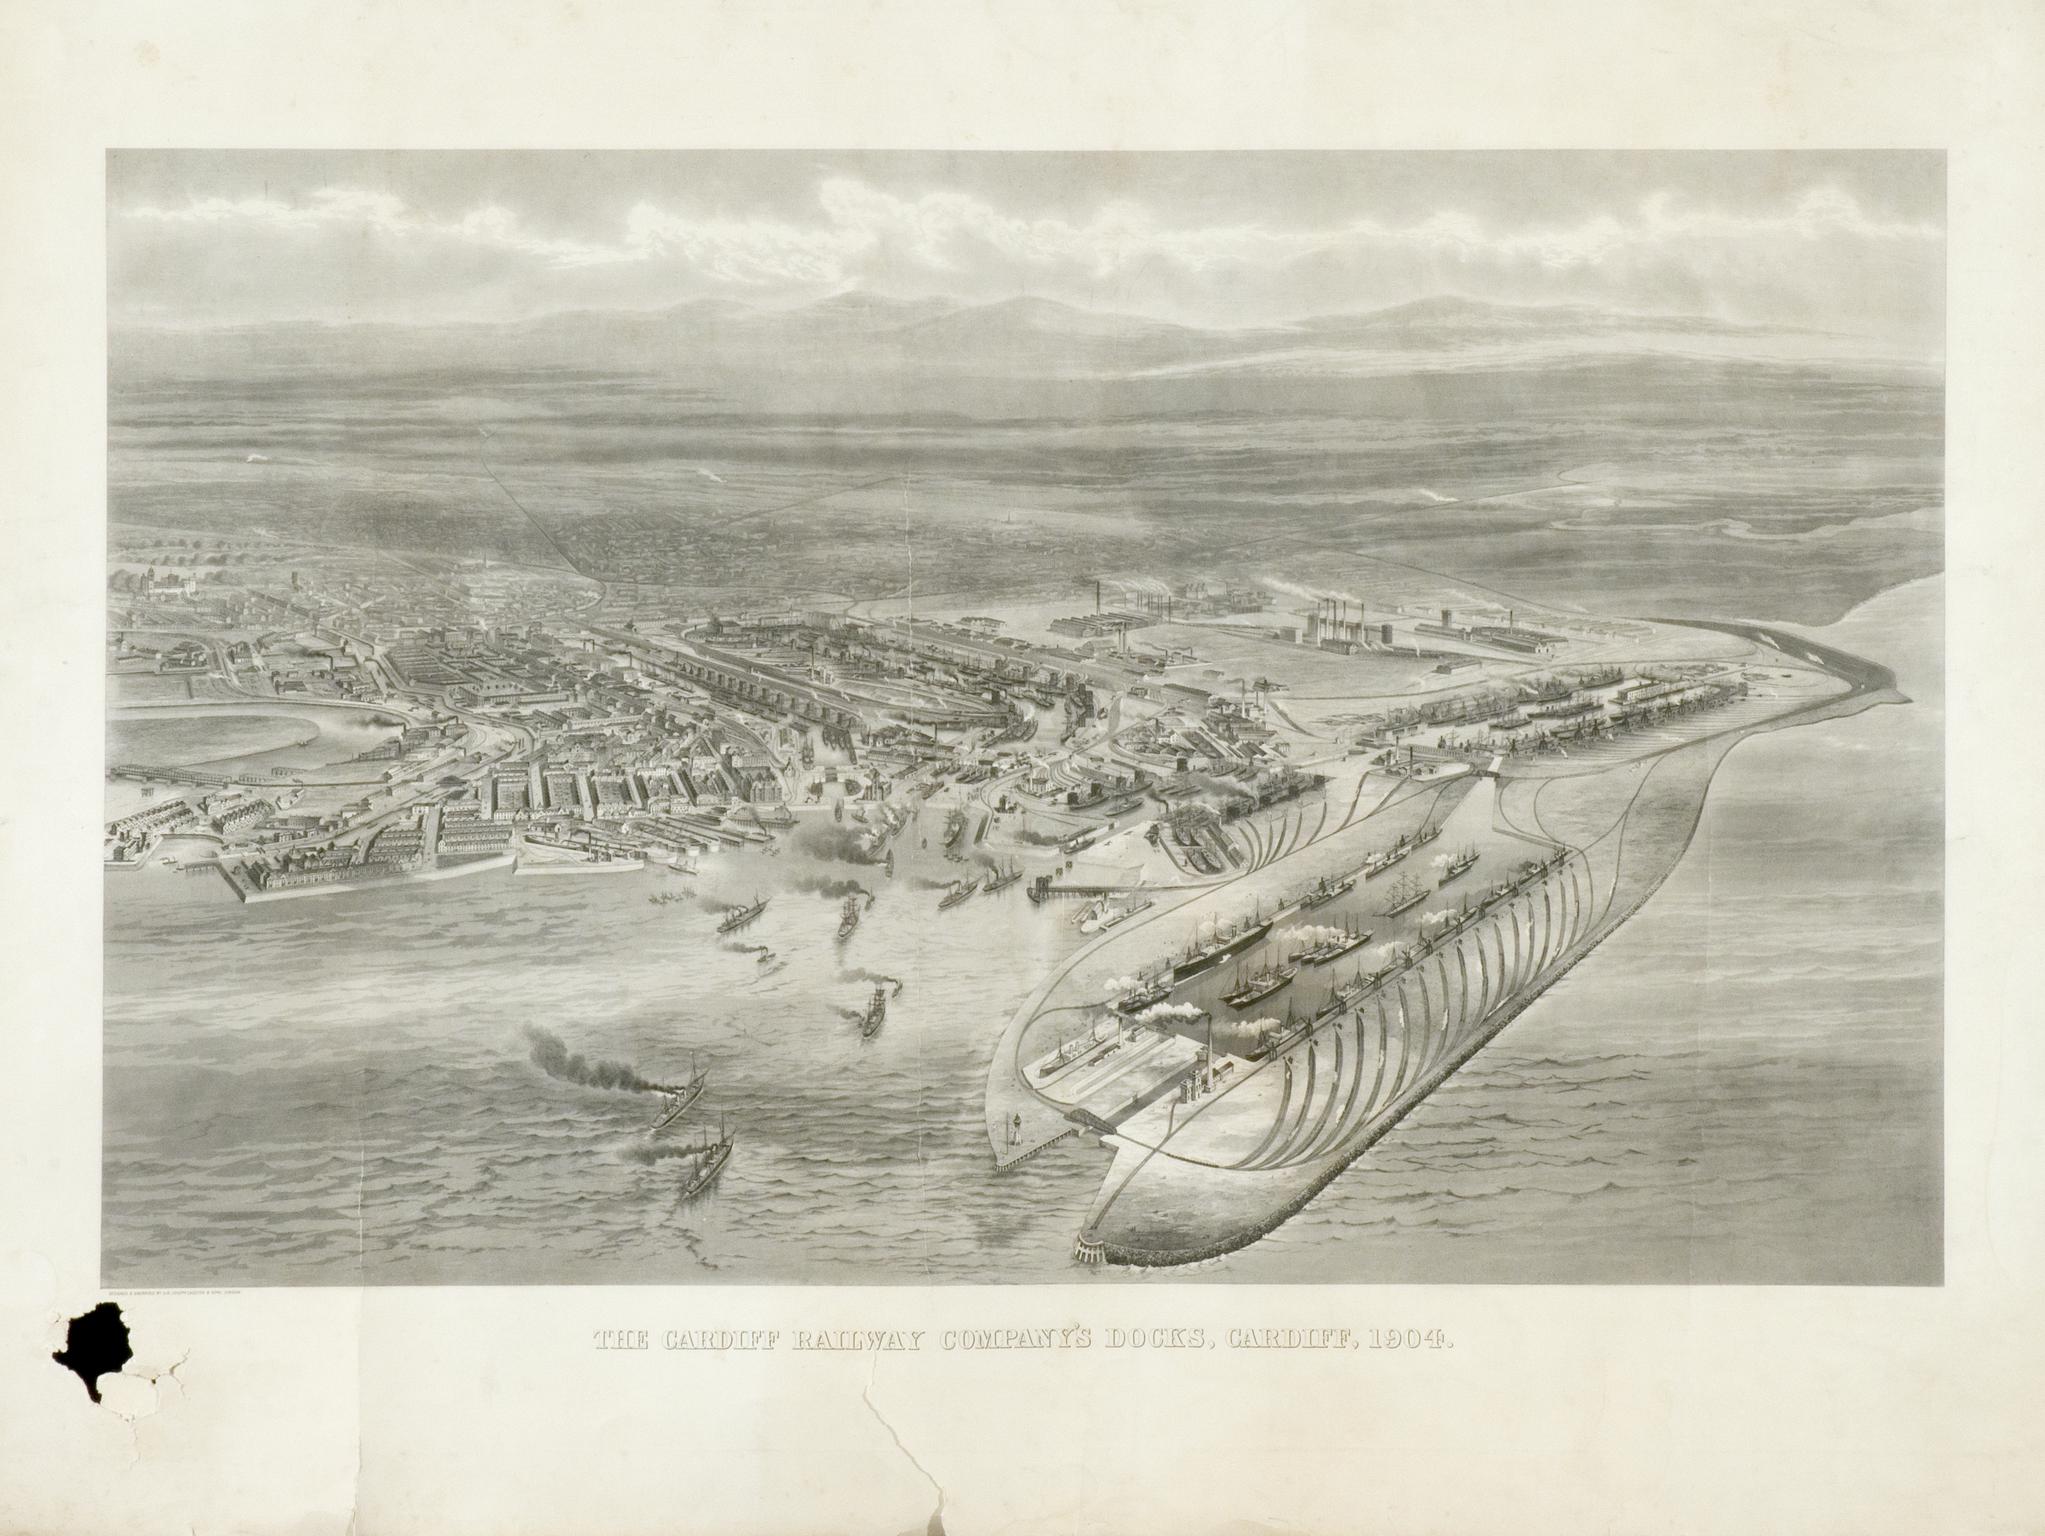 The Cardiff Railway Company's Docks, Cardiff, 1904 (print)